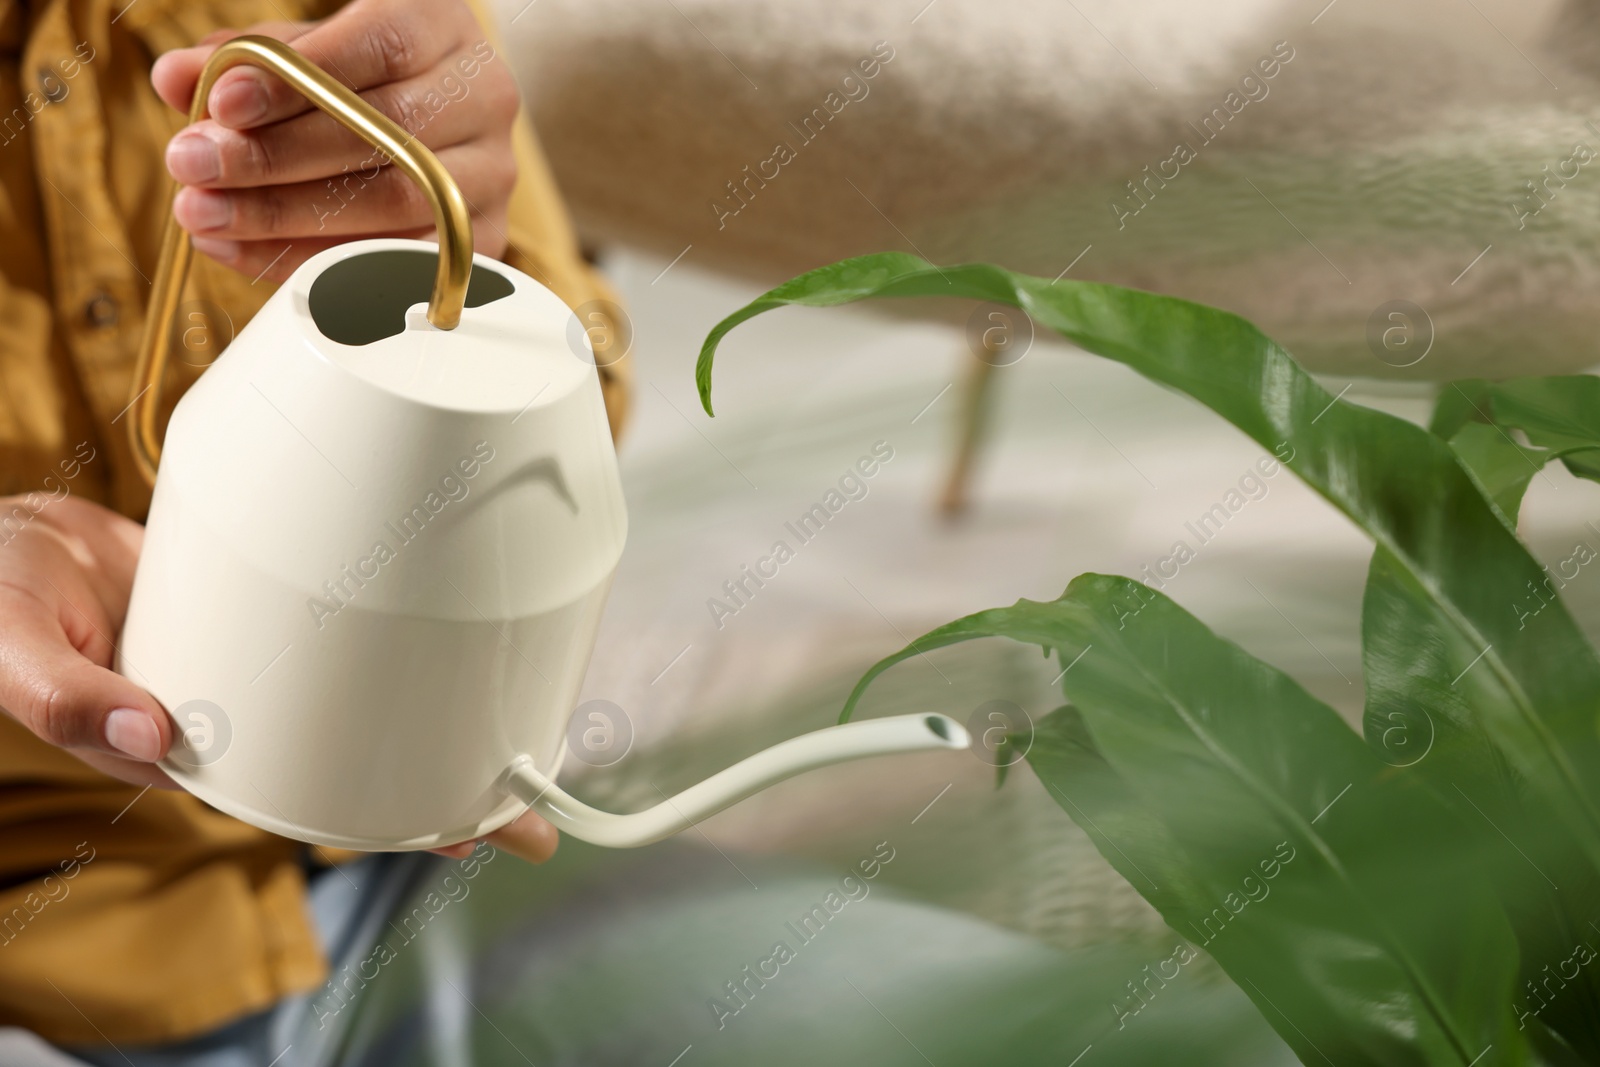 Photo of Woman watering beautiful houseplant indoors, closeup view